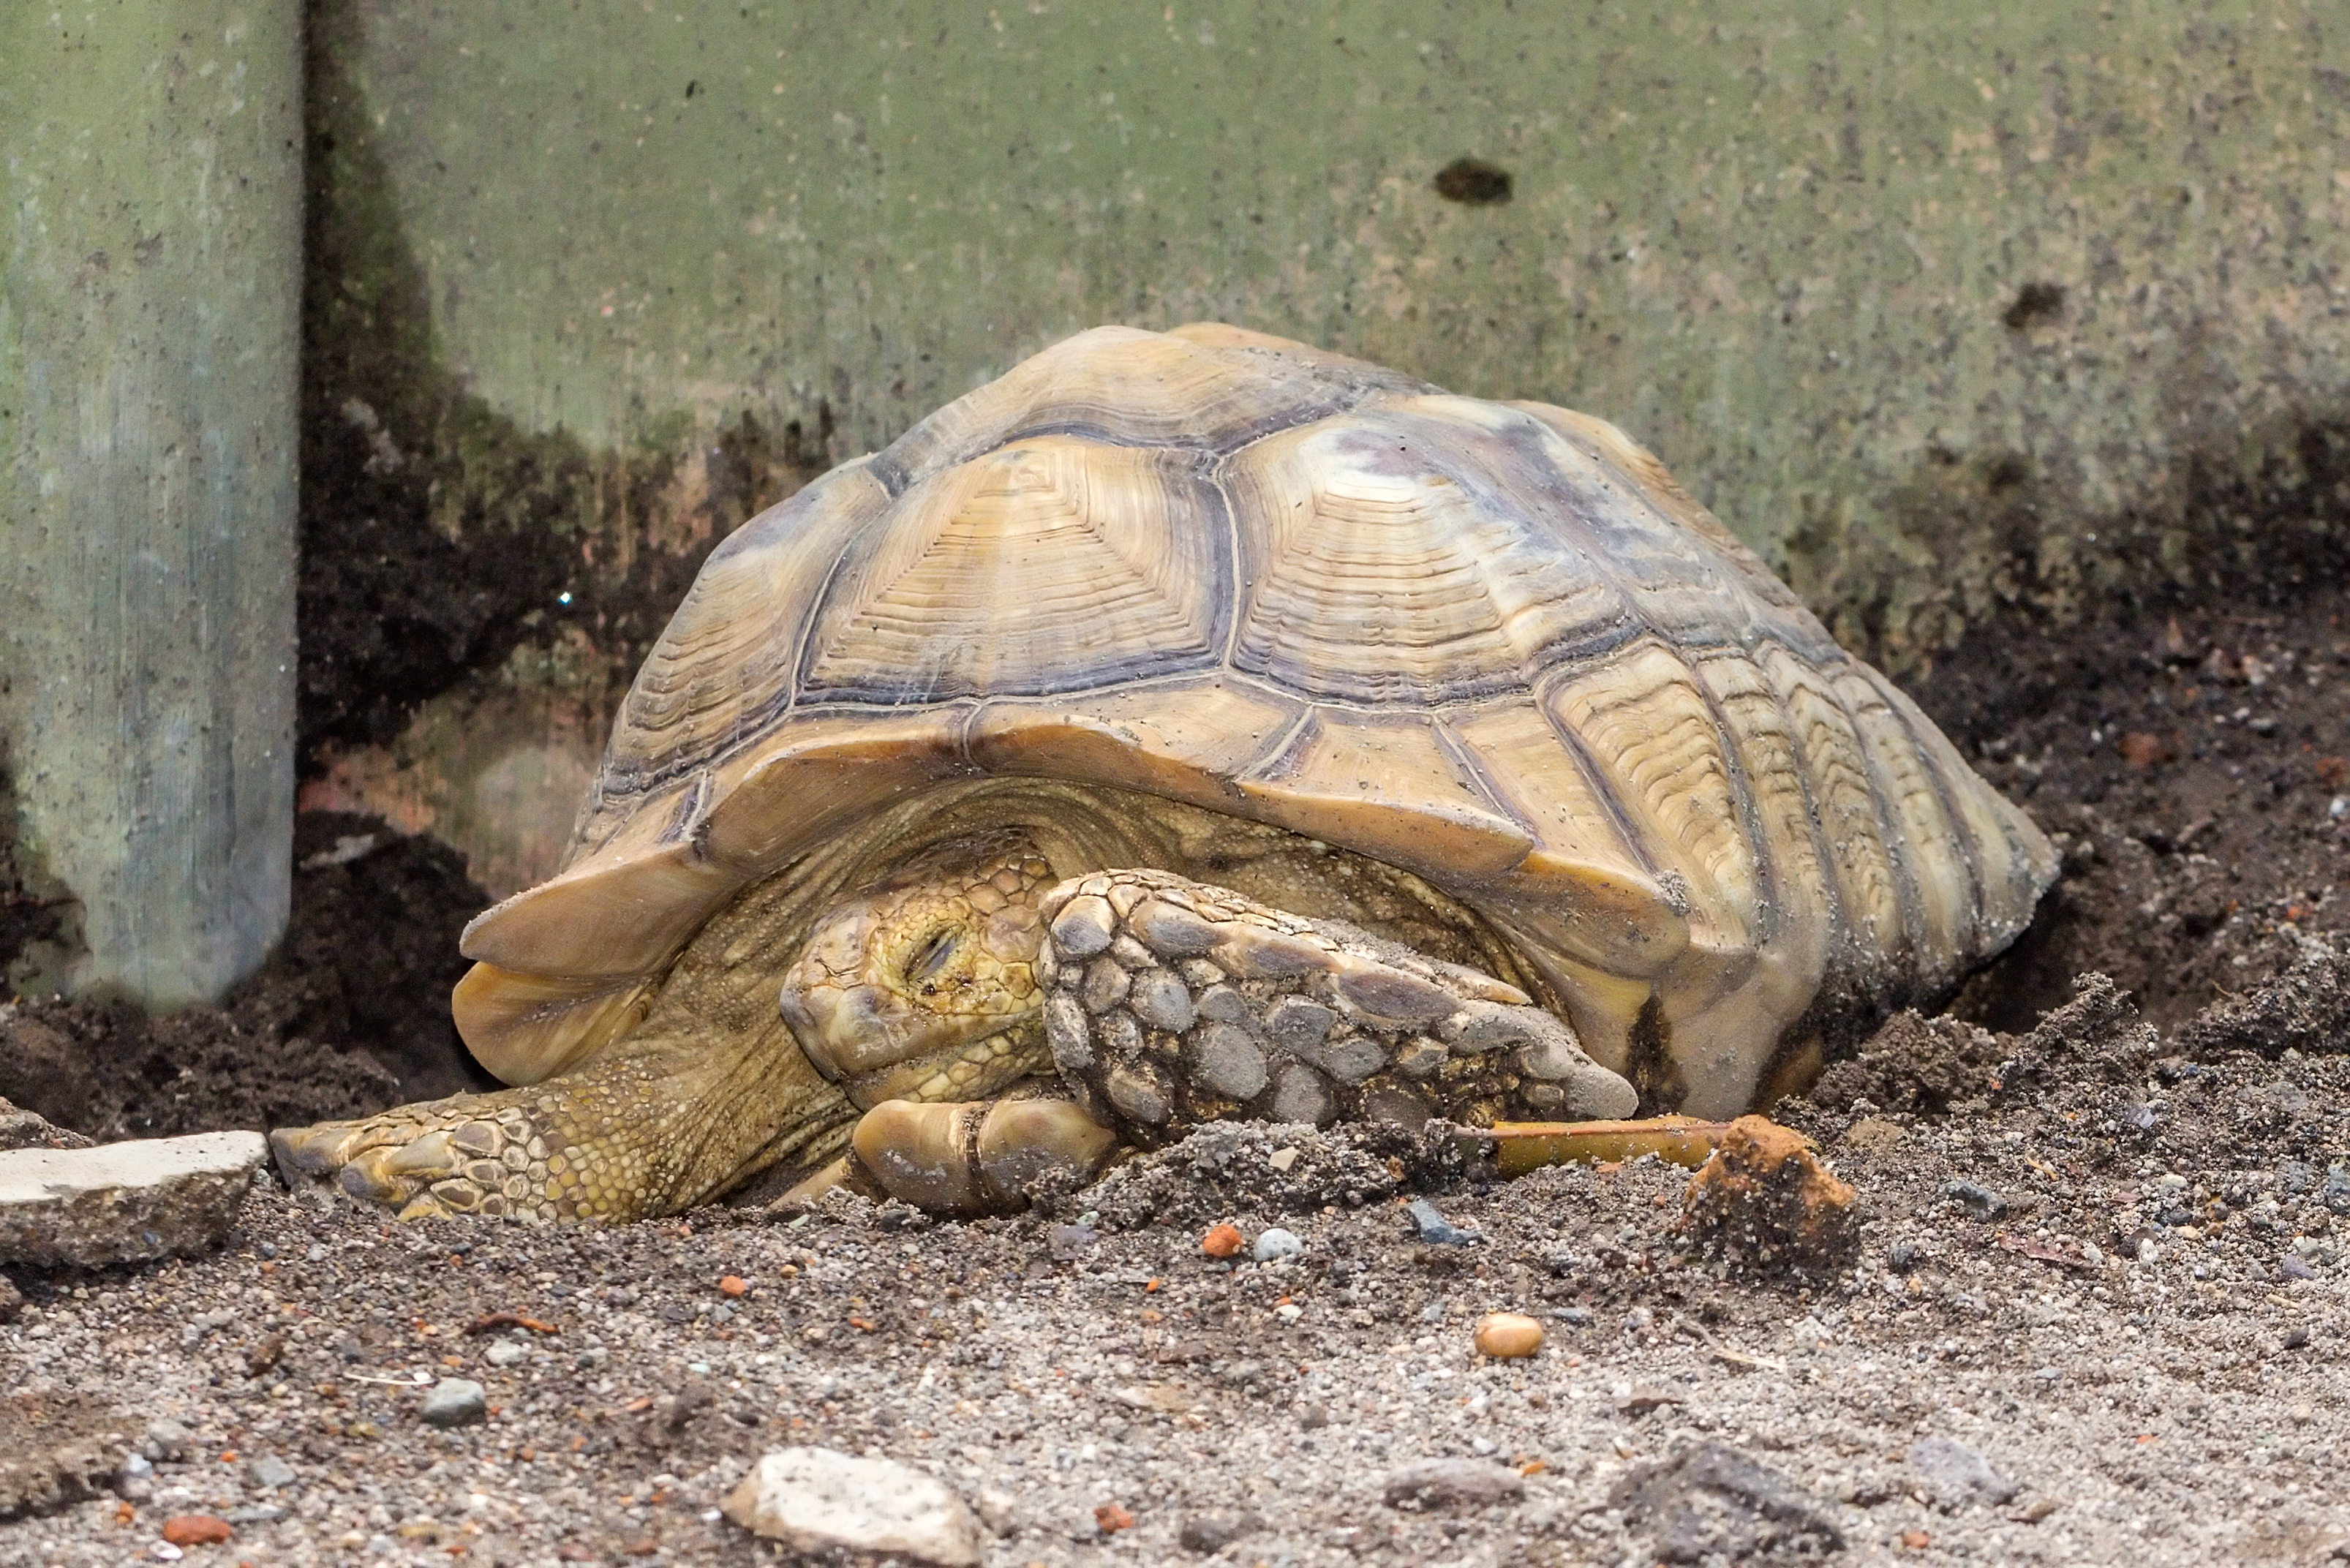 African spurred tortoise (Centrochelys sulcata), Gembira Loka Zoo, 2015-03-15